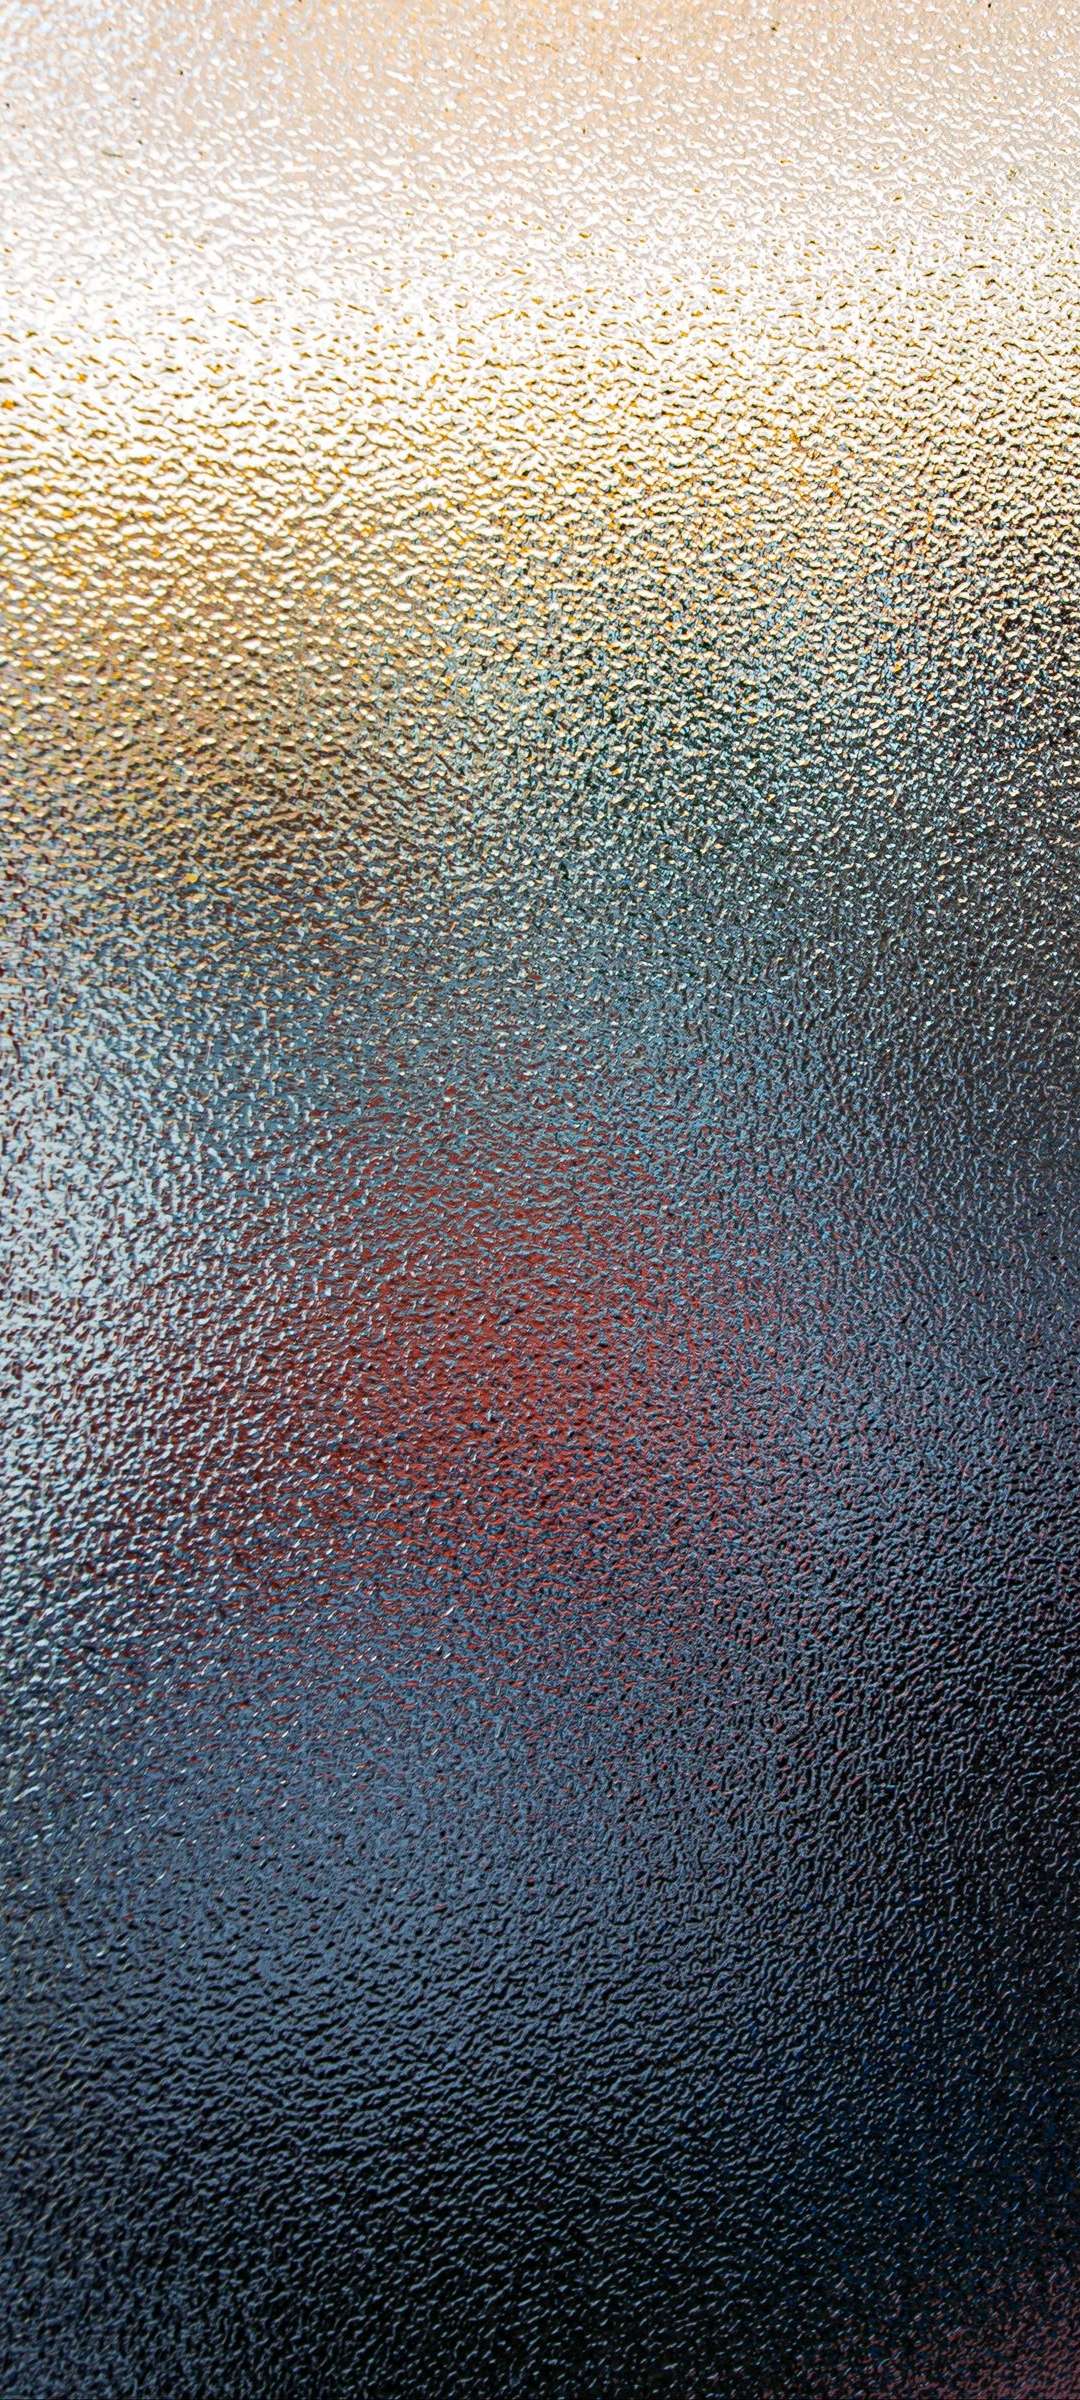 HD wallpaper broken glass wallpaper cracked shards backgrounds glass   material  Wallpaper Flare